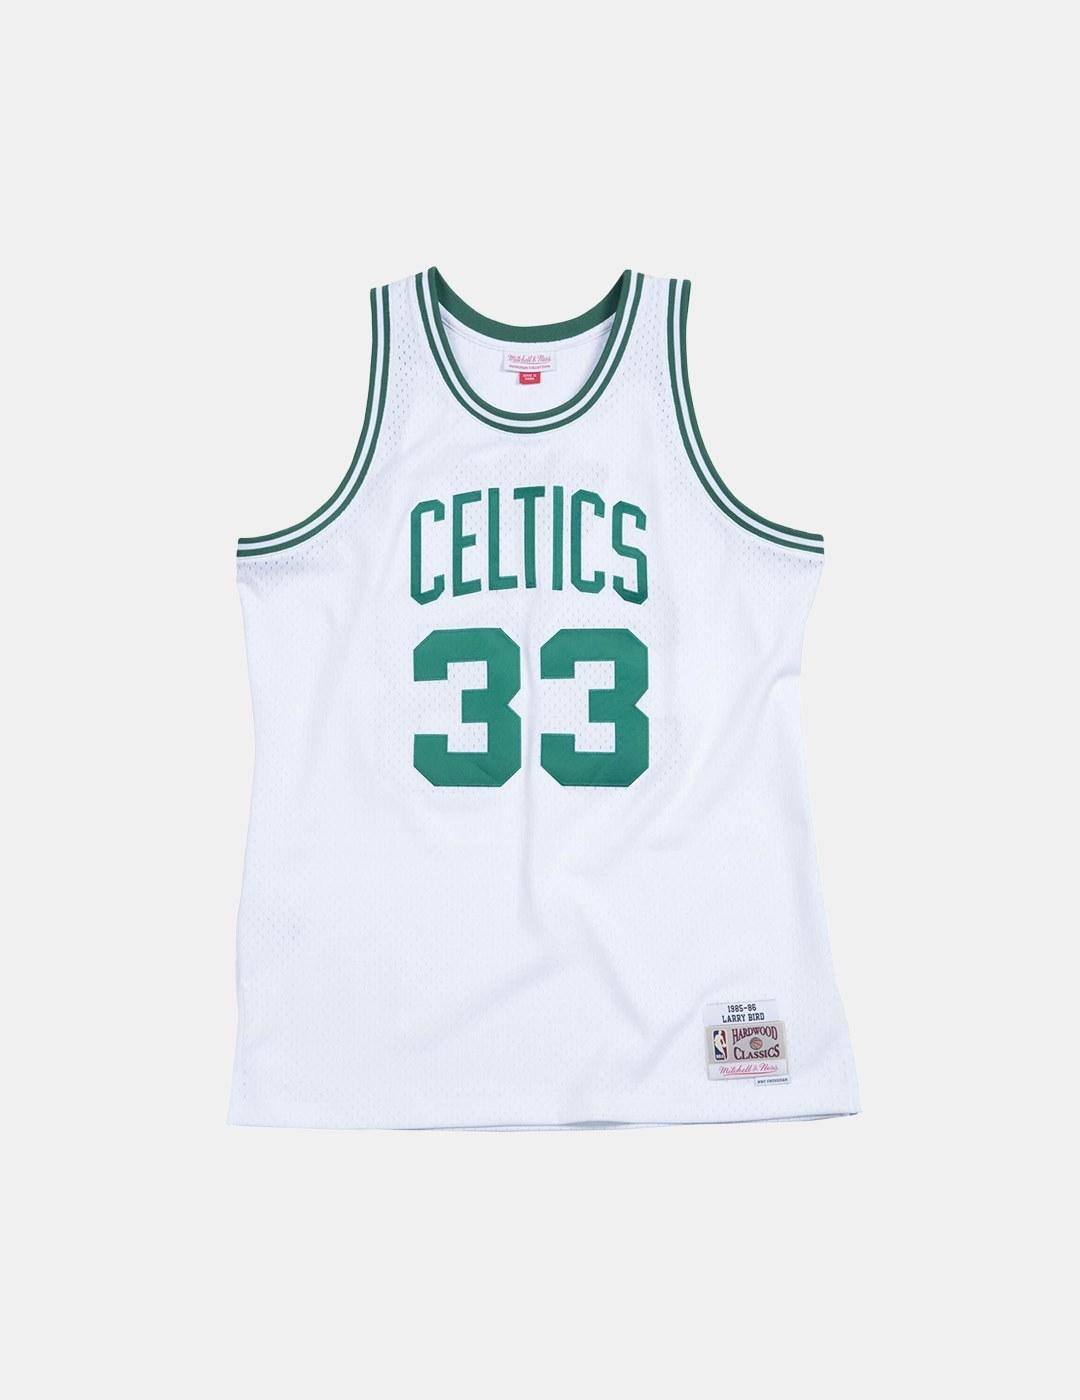 Camiseta Mitchell & Ness NBA Celtics Swigman Bird